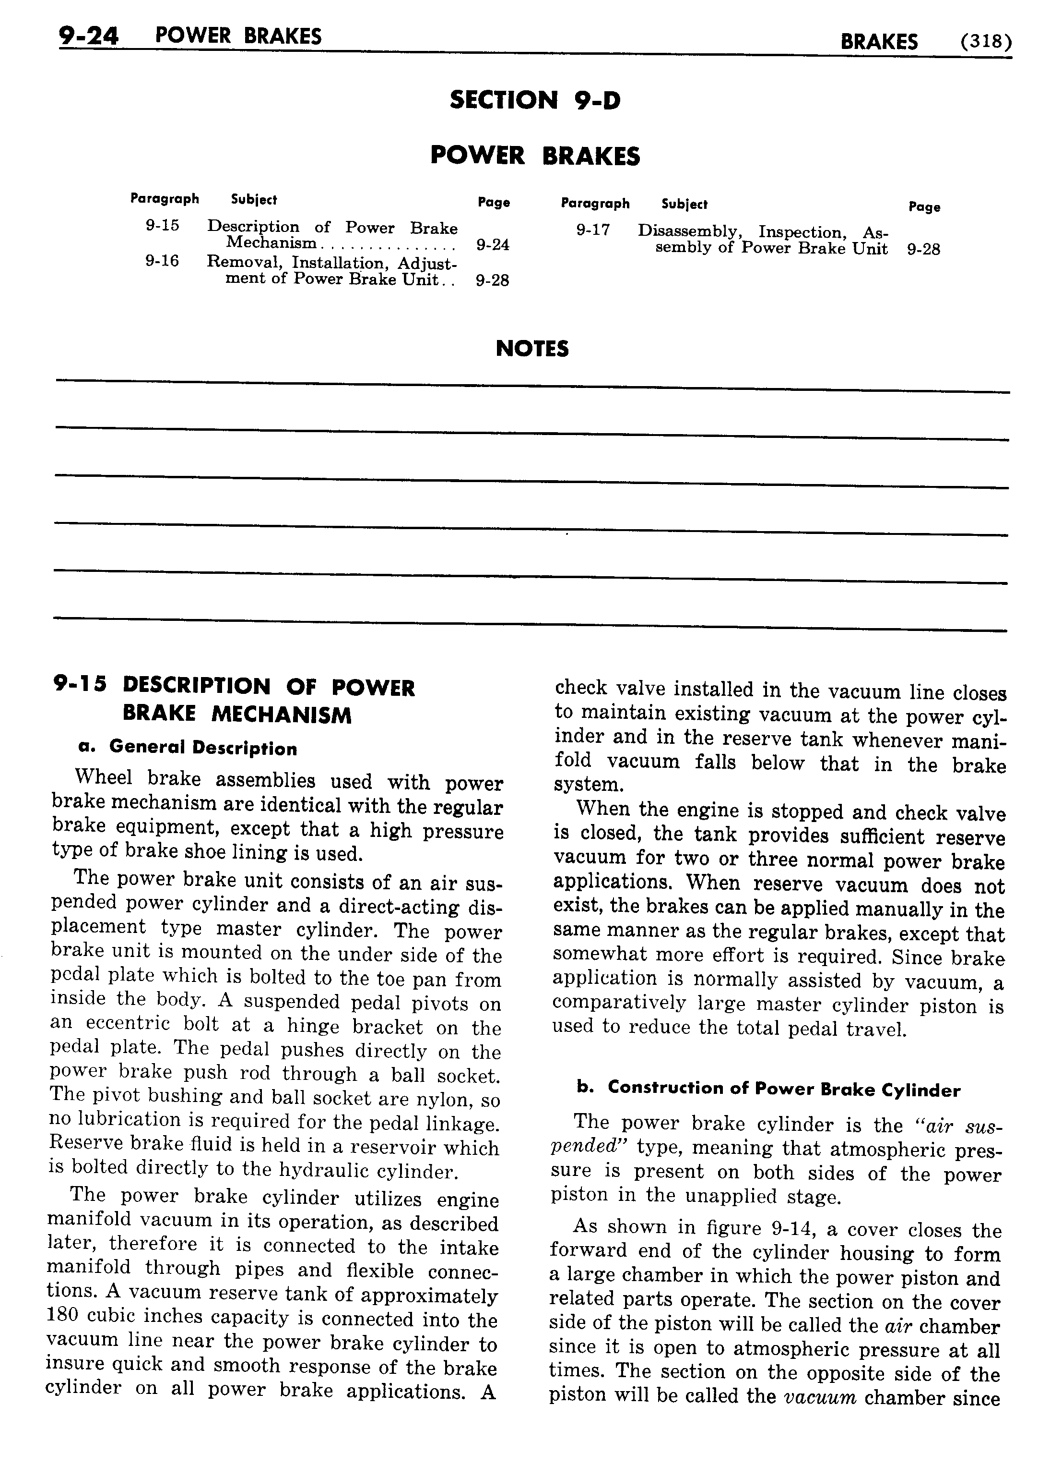 n_10 1956 Buick Shop Manual - Brakes-024-024.jpg